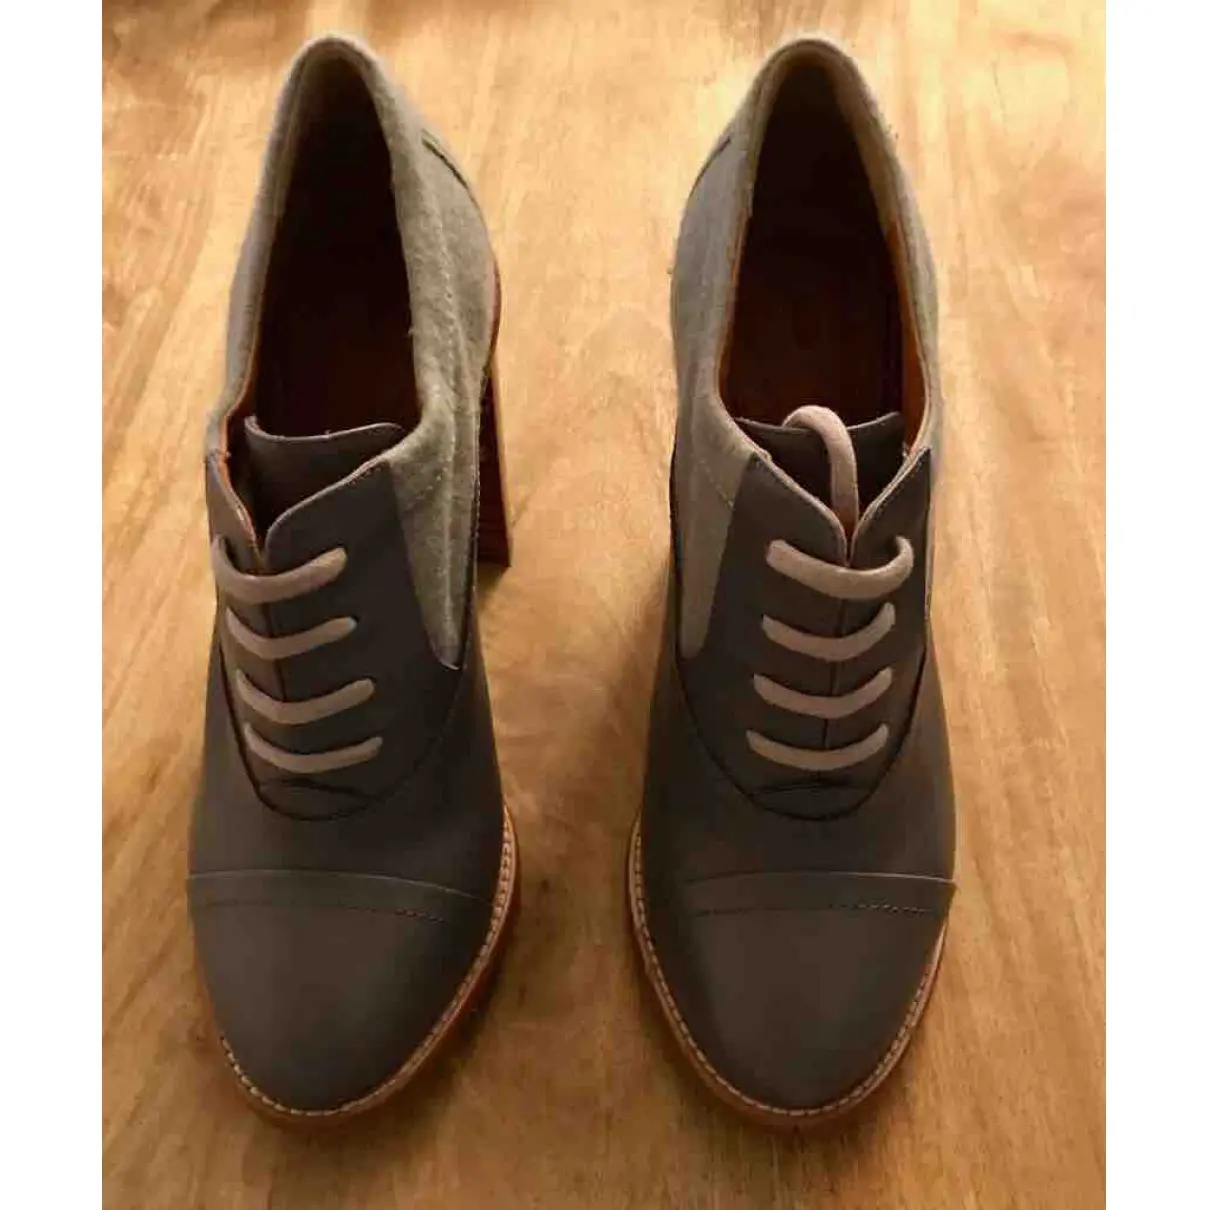 Buy Chloé Leather heels online